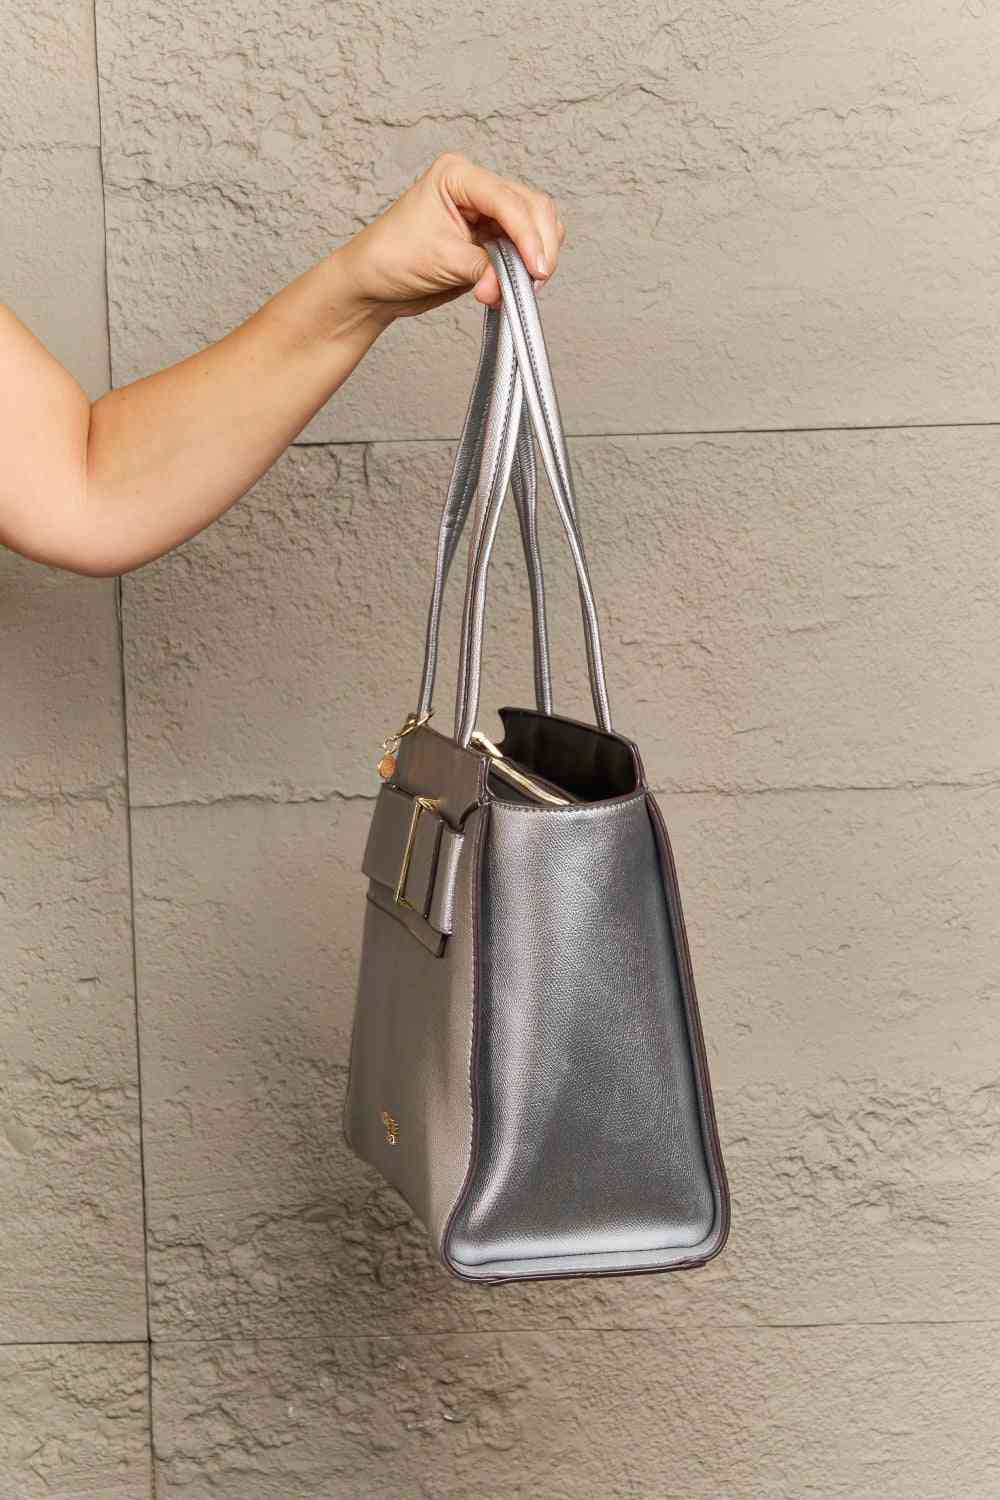 Rosy Brown Nicole Lee USA Regina 3-Piece Satchel Bag Set Sentient Beauty Fashions *Accessories